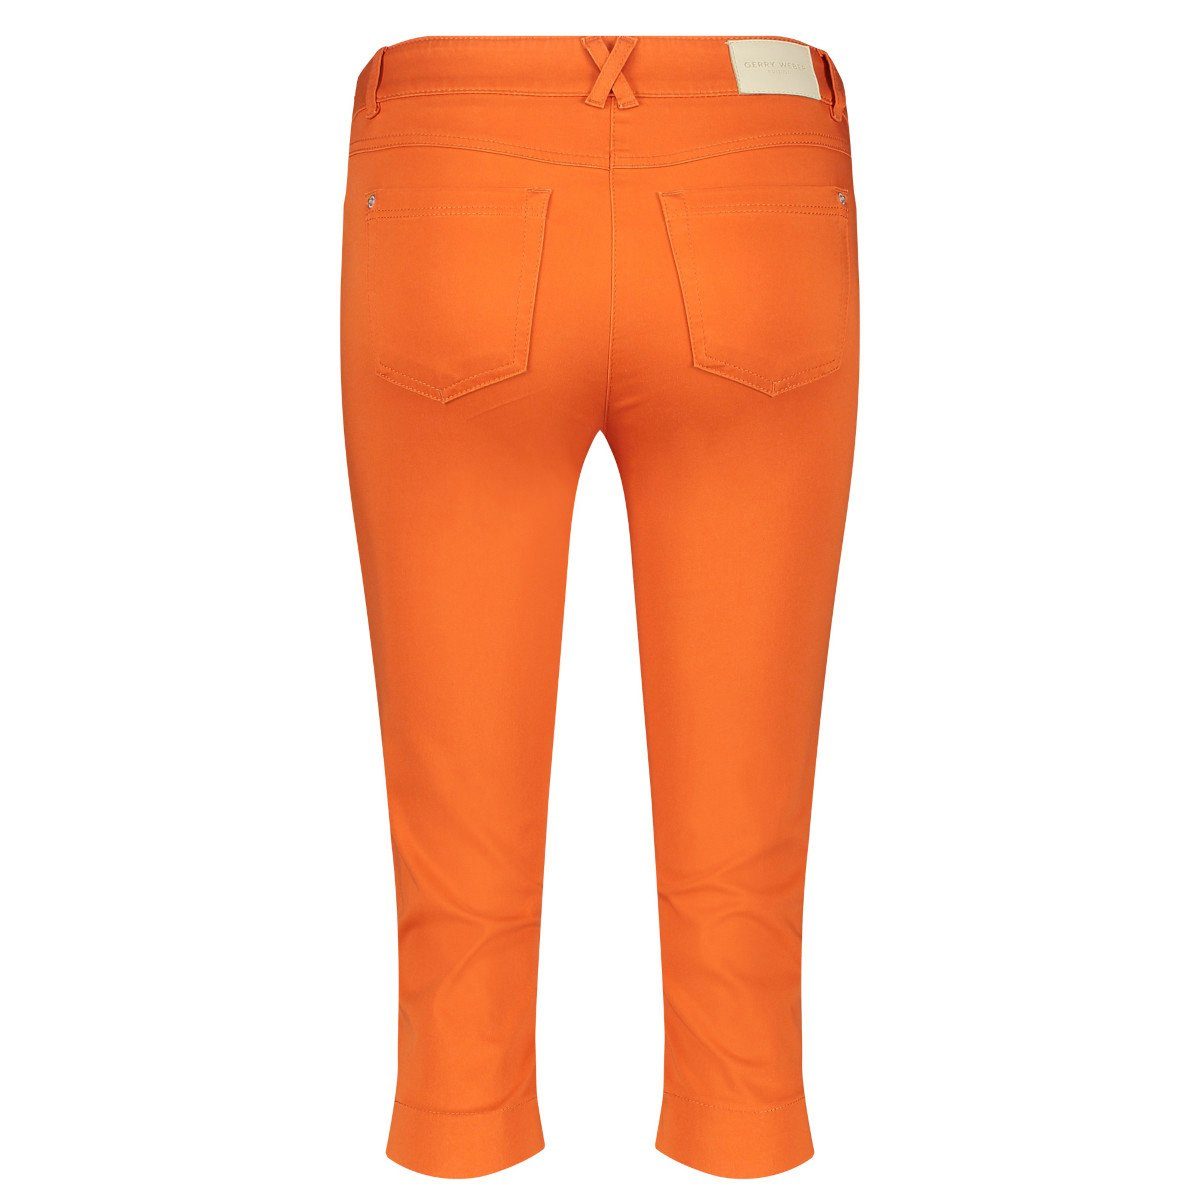 GERRY WEBER Caprijeans Best4ME Fit Capri 92343-67712 Burnt Orange Perfect